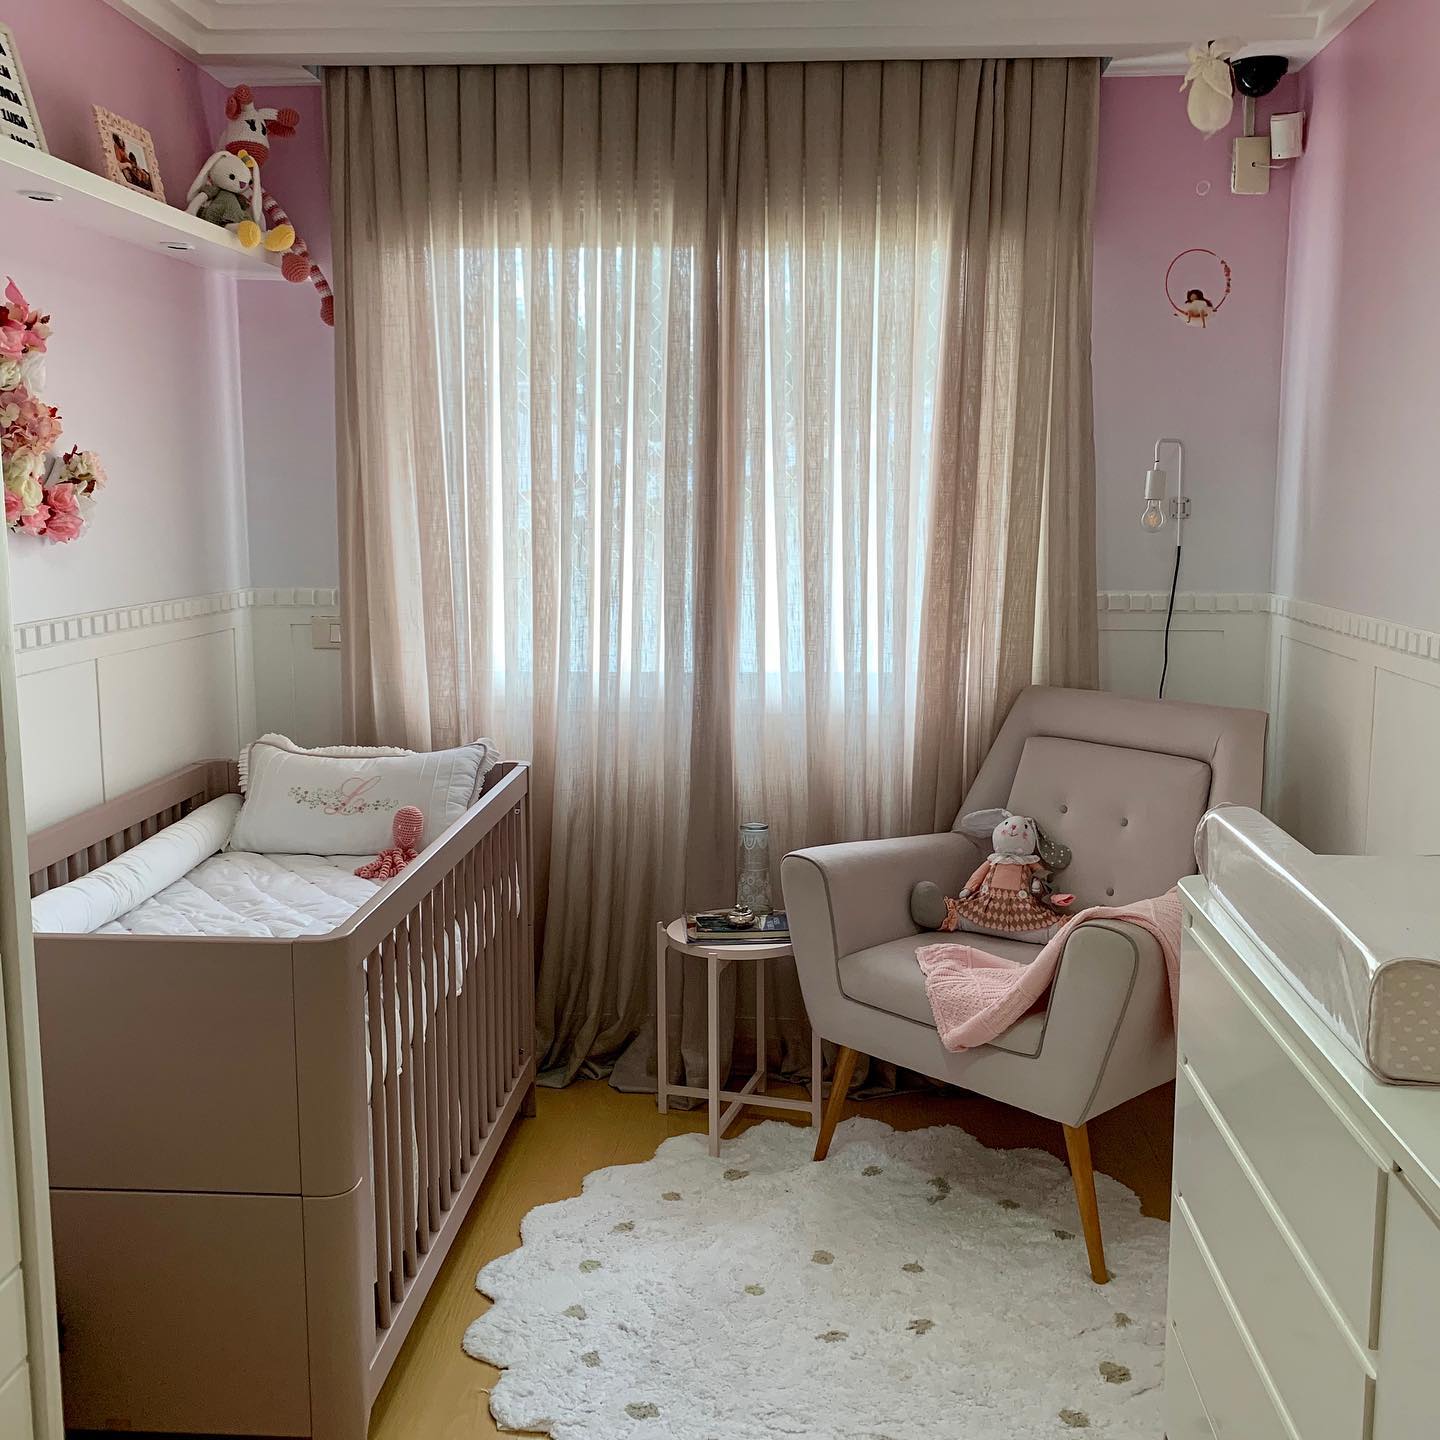 Foto de cortina para quarto de bebe 104 - 3